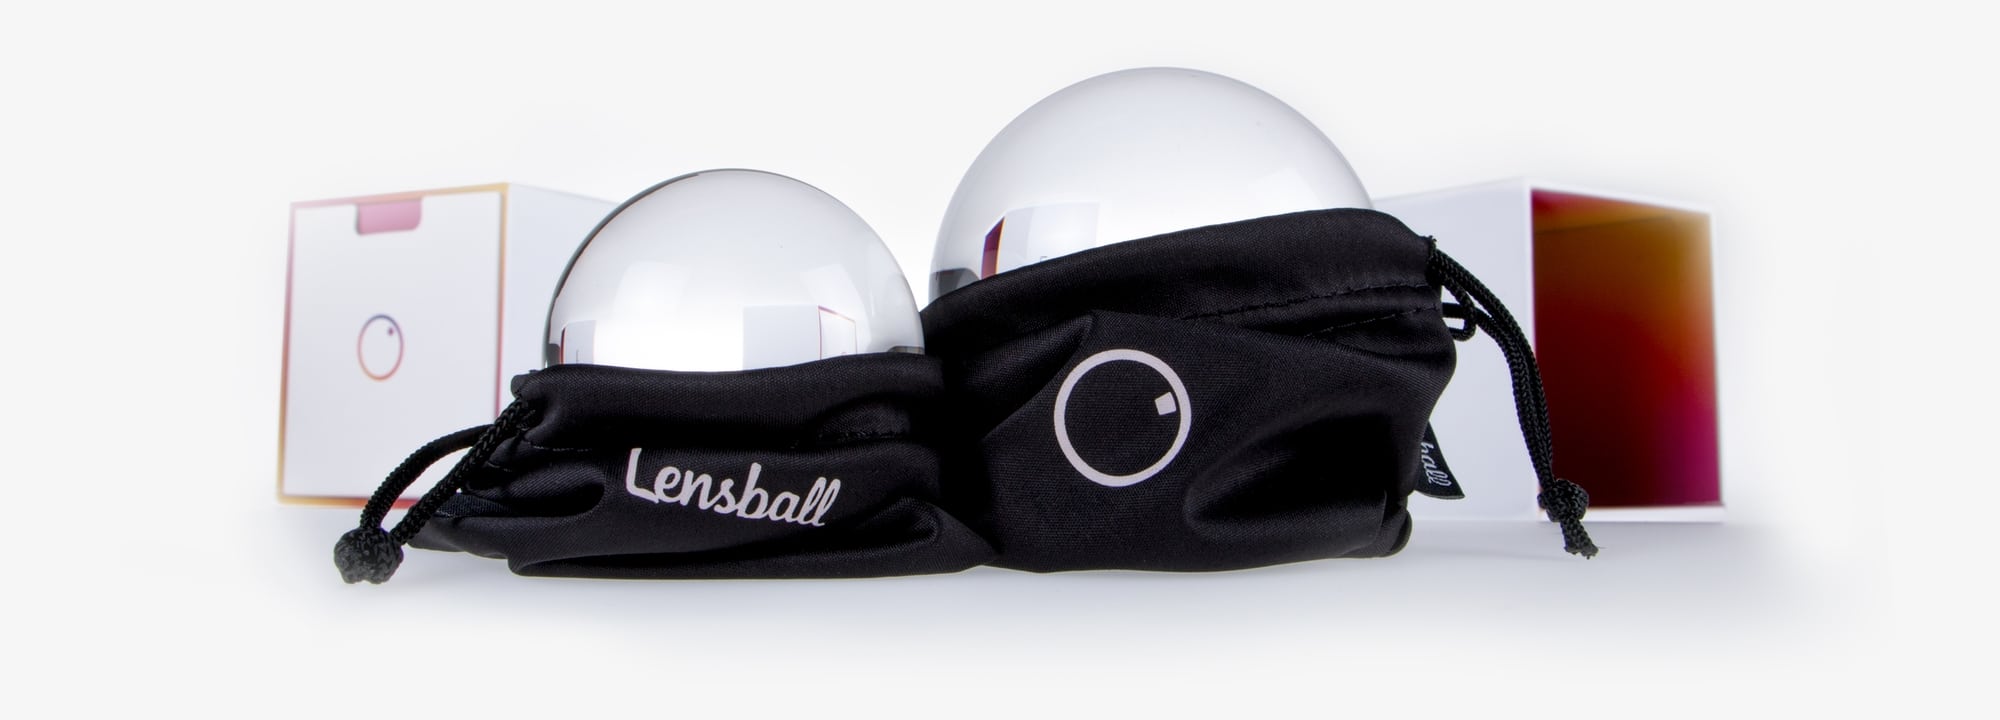 Lensball - Two Sizes - SWAGGER Magazine